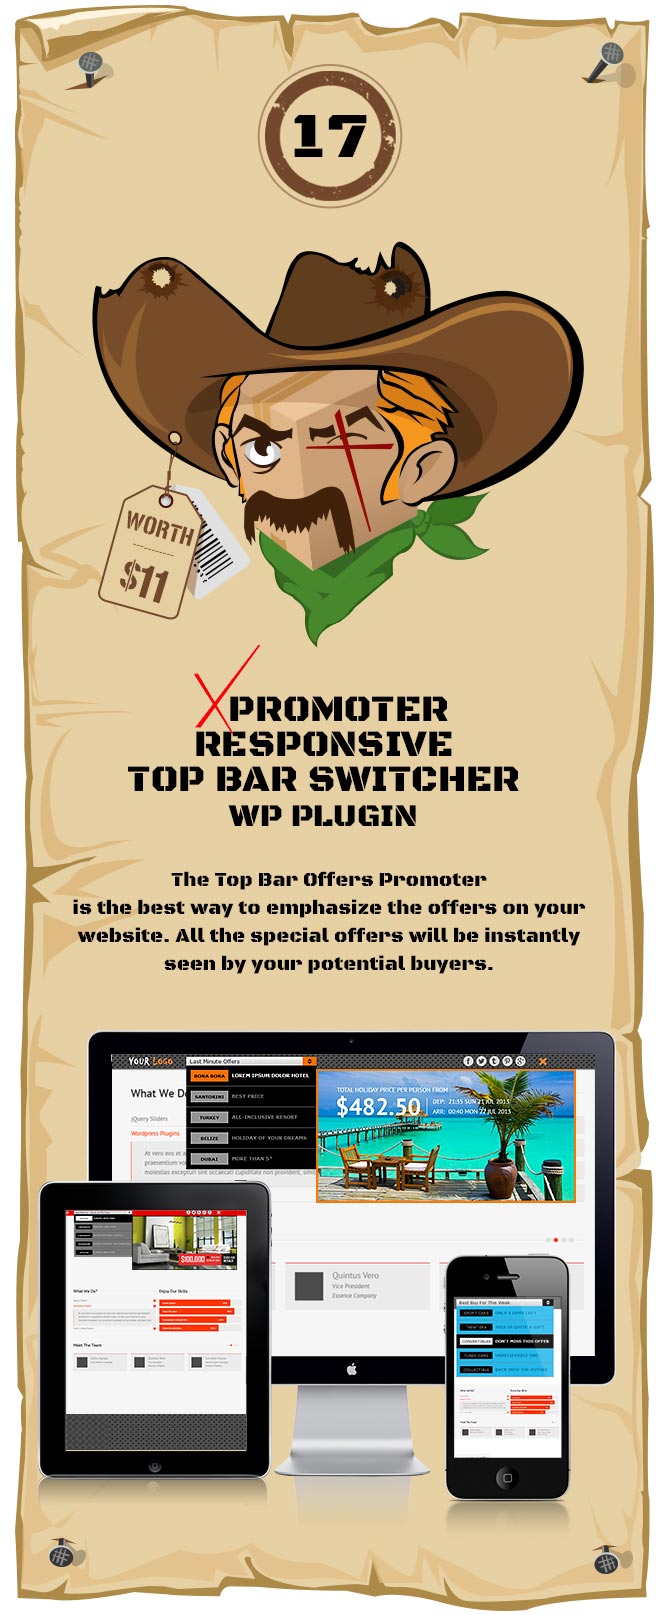 xPromoter - Top Bar Switcher Responsive WordPress Plugin